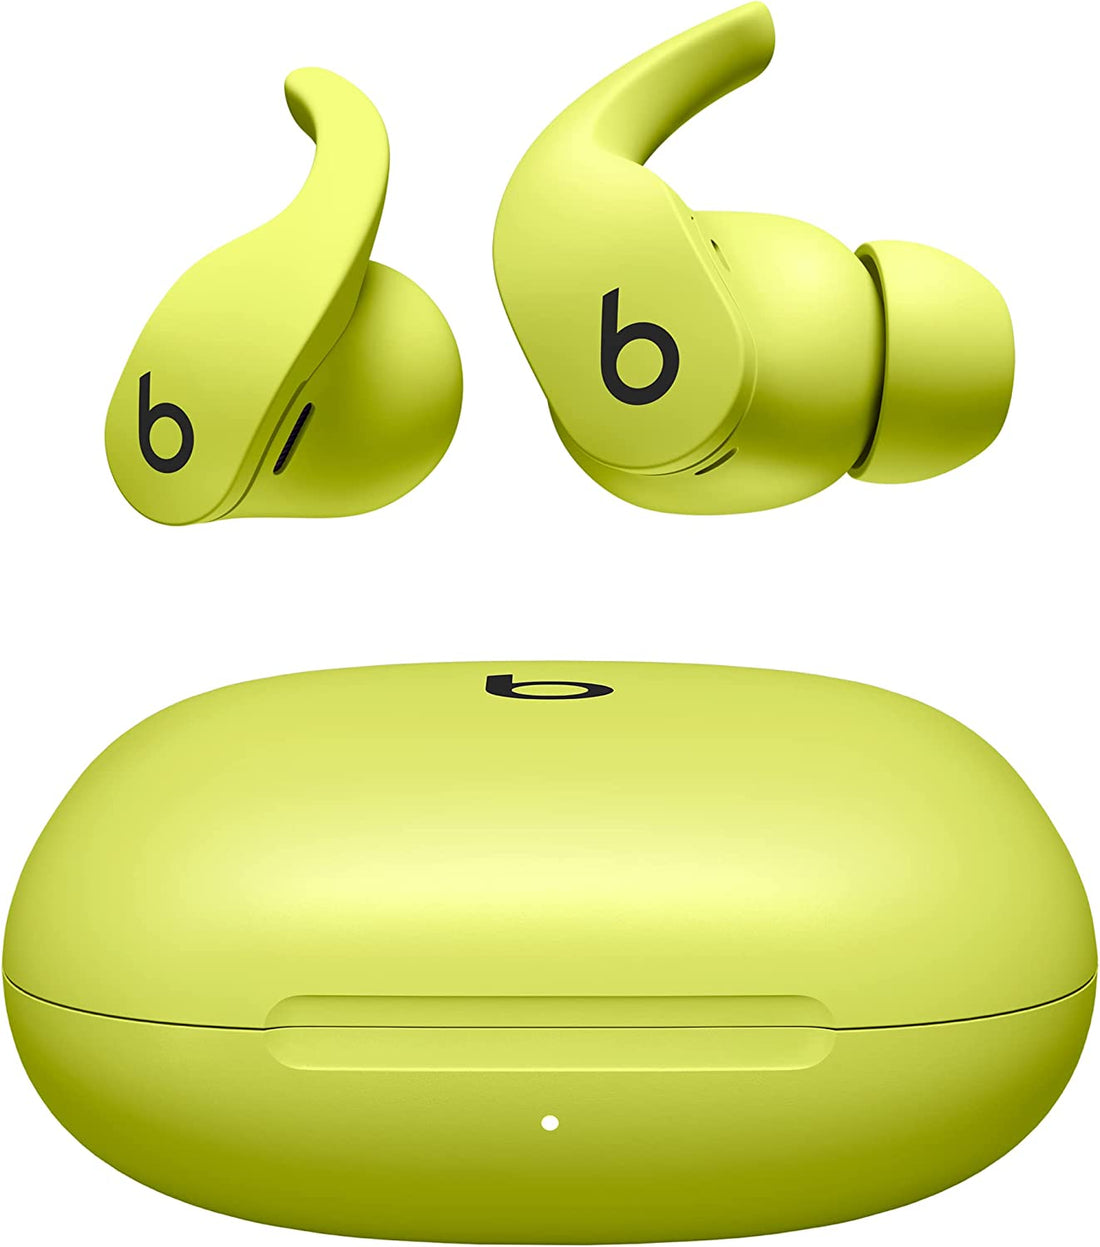 Beats Fit Pro Noise Cancelling In-Ear True-Wireless Earbud - Volt Yellow (Certified Refurbished)